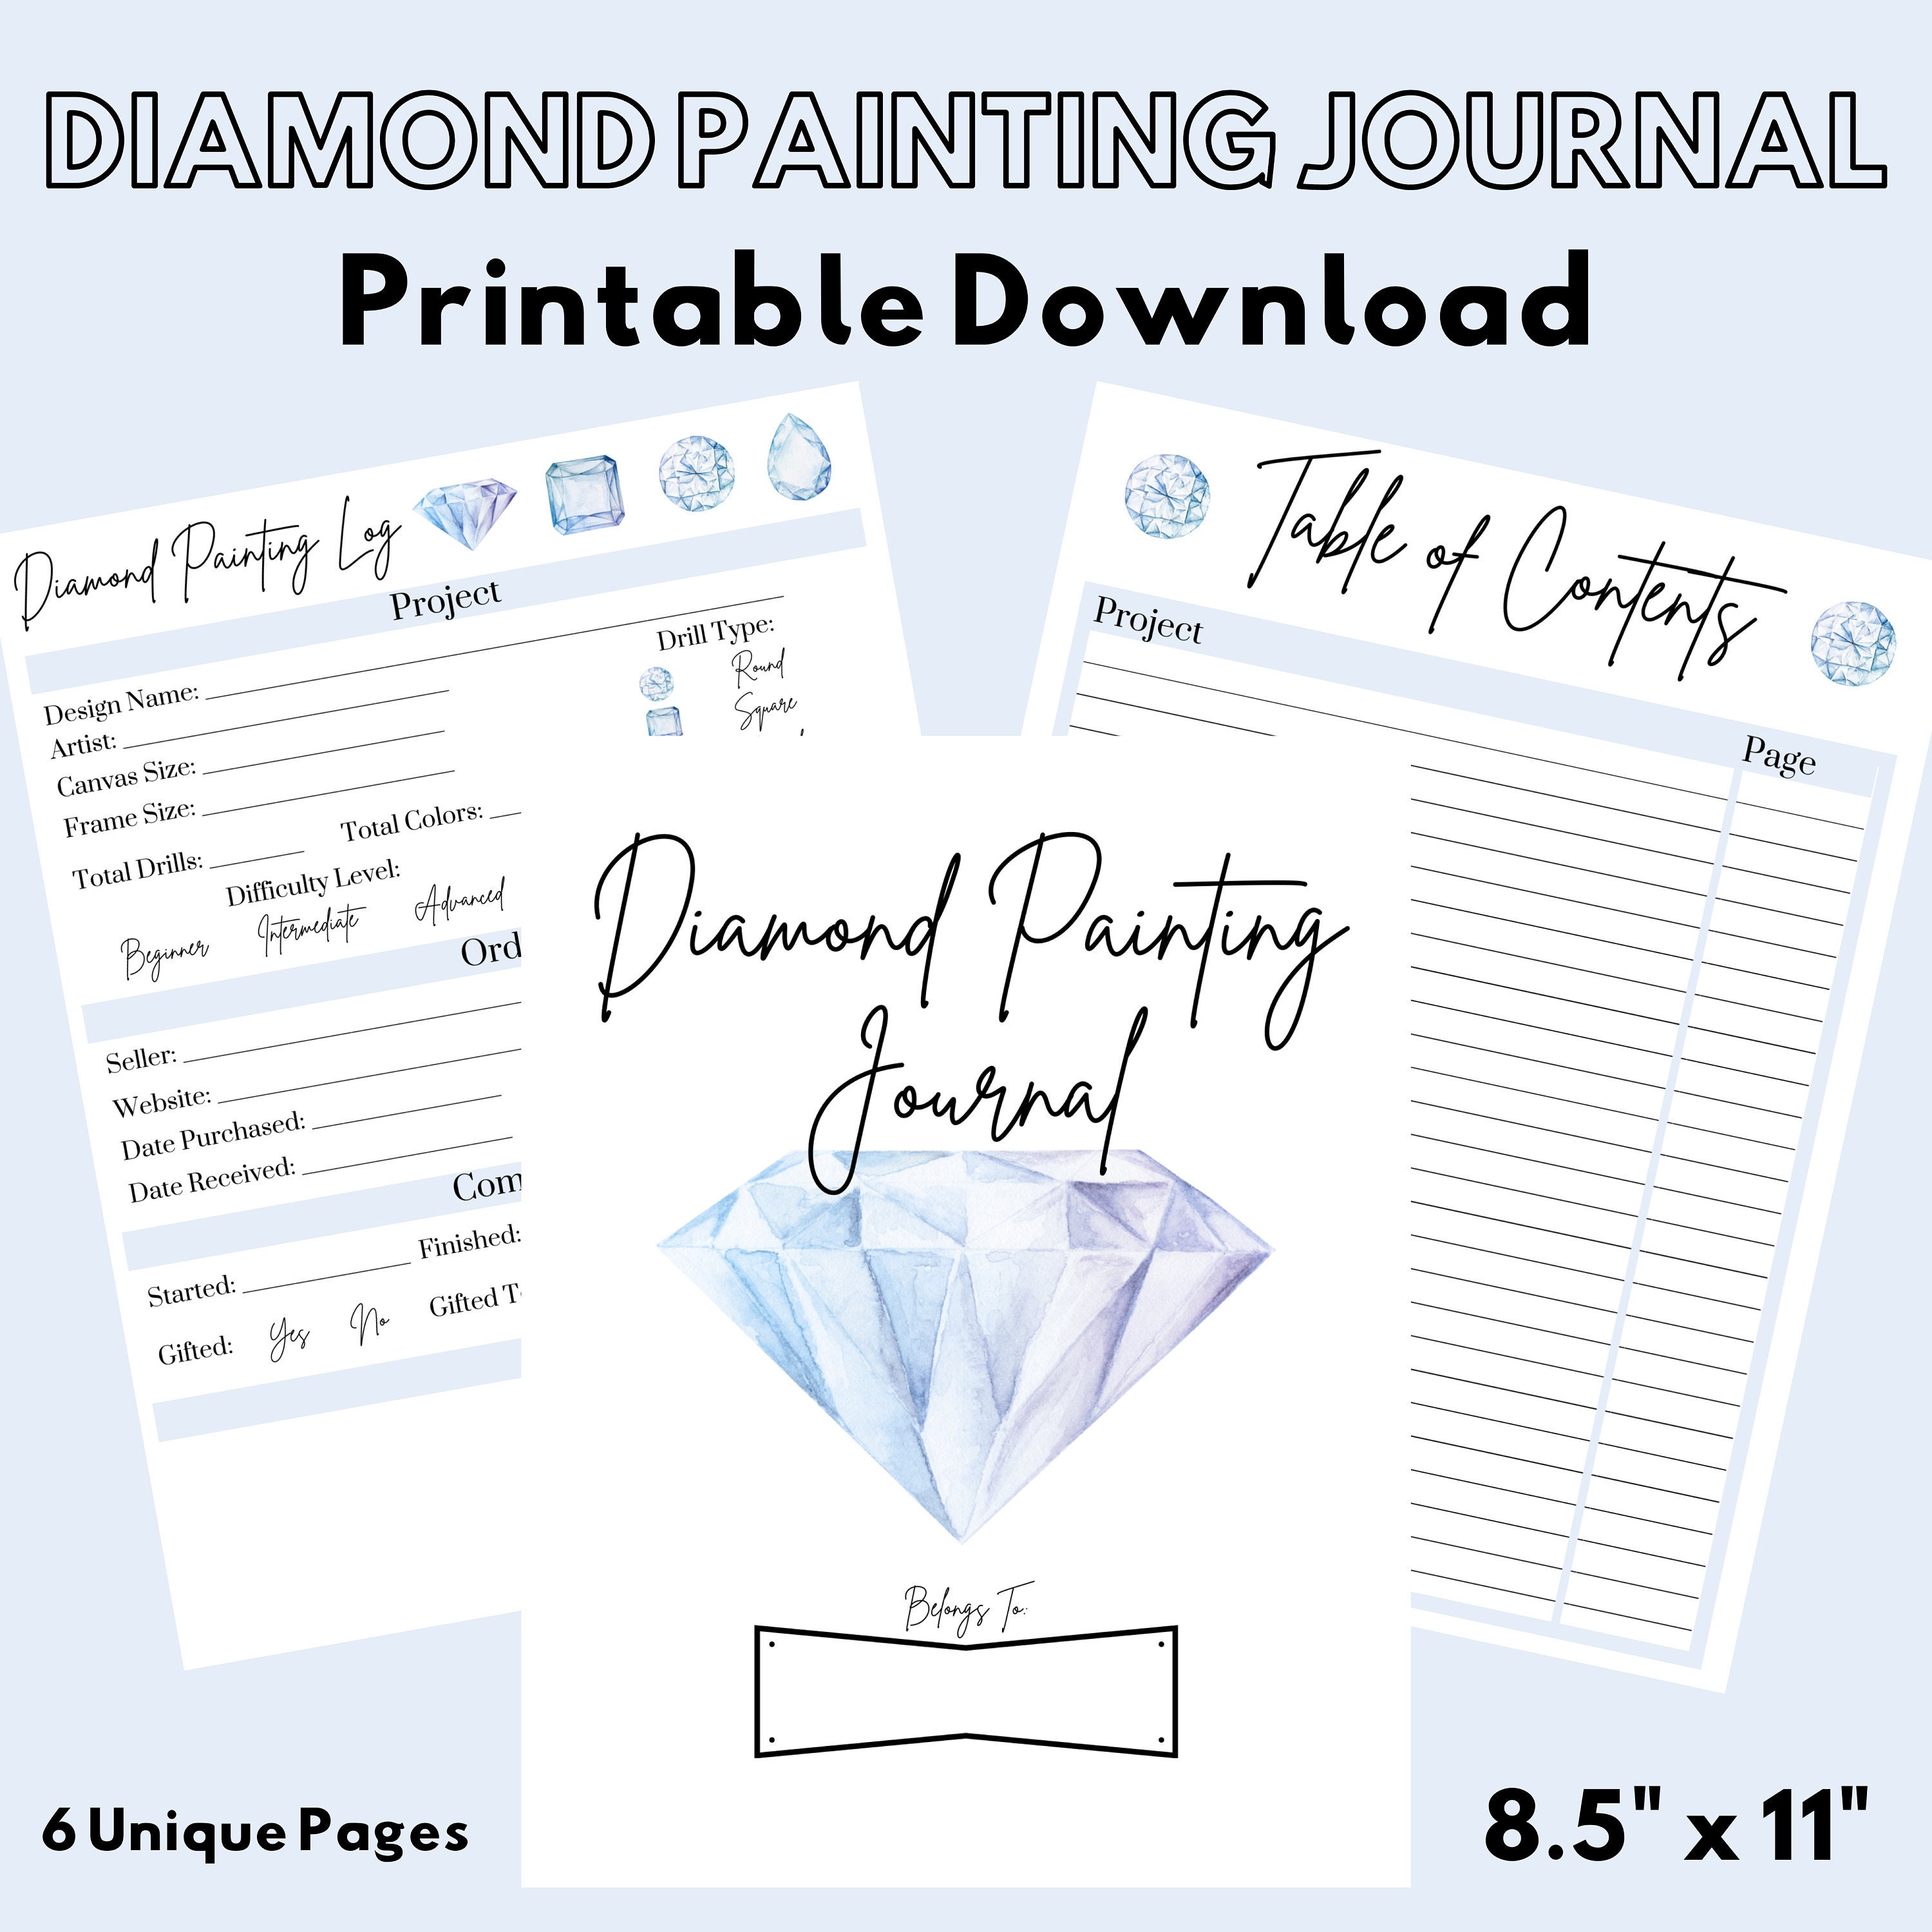 PRINTABLE Diamond Painting LOG BOOK – Track Diamond Painting Projects